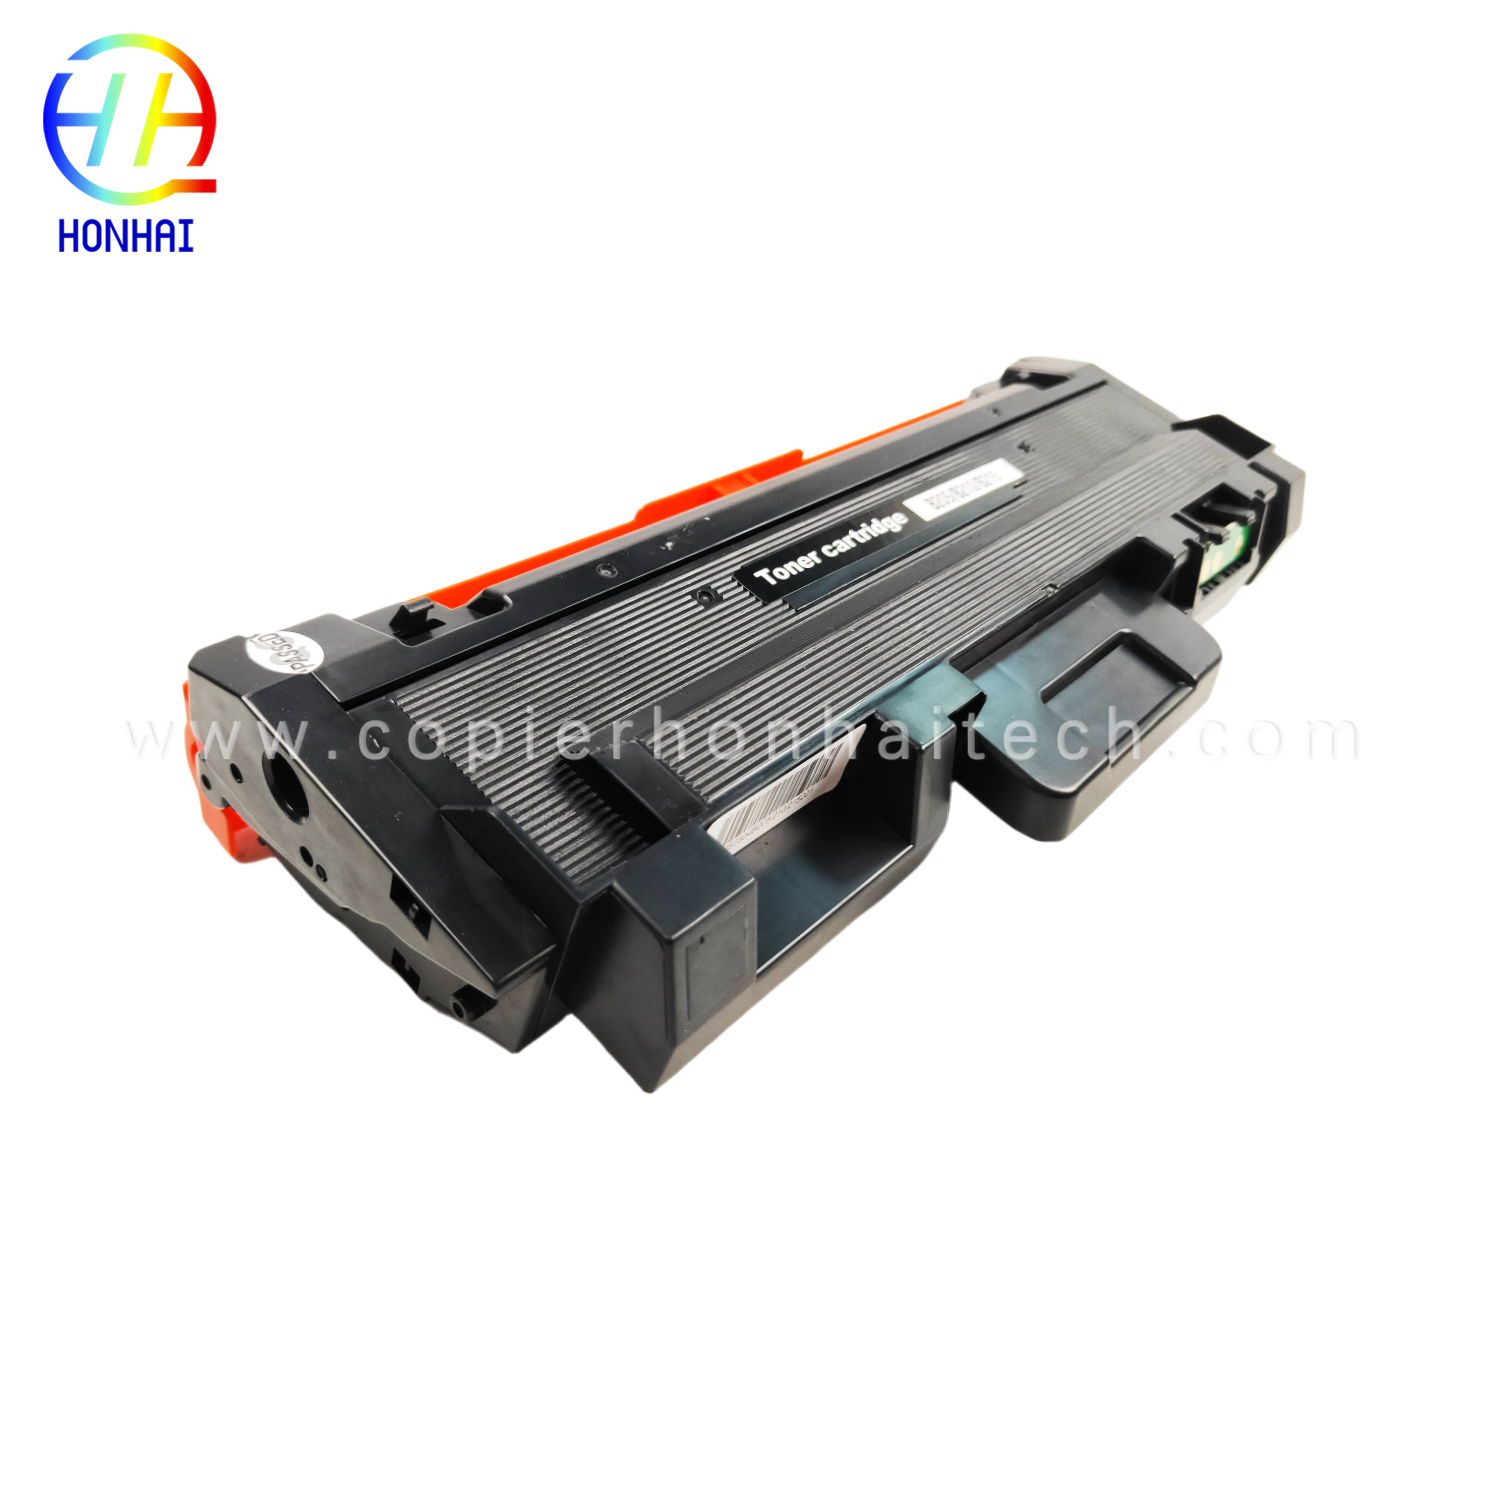 https://www.copierhonhaitech.com/black-toner-cartridge-for-xerox-b205-b210-b215-106r04348-product/